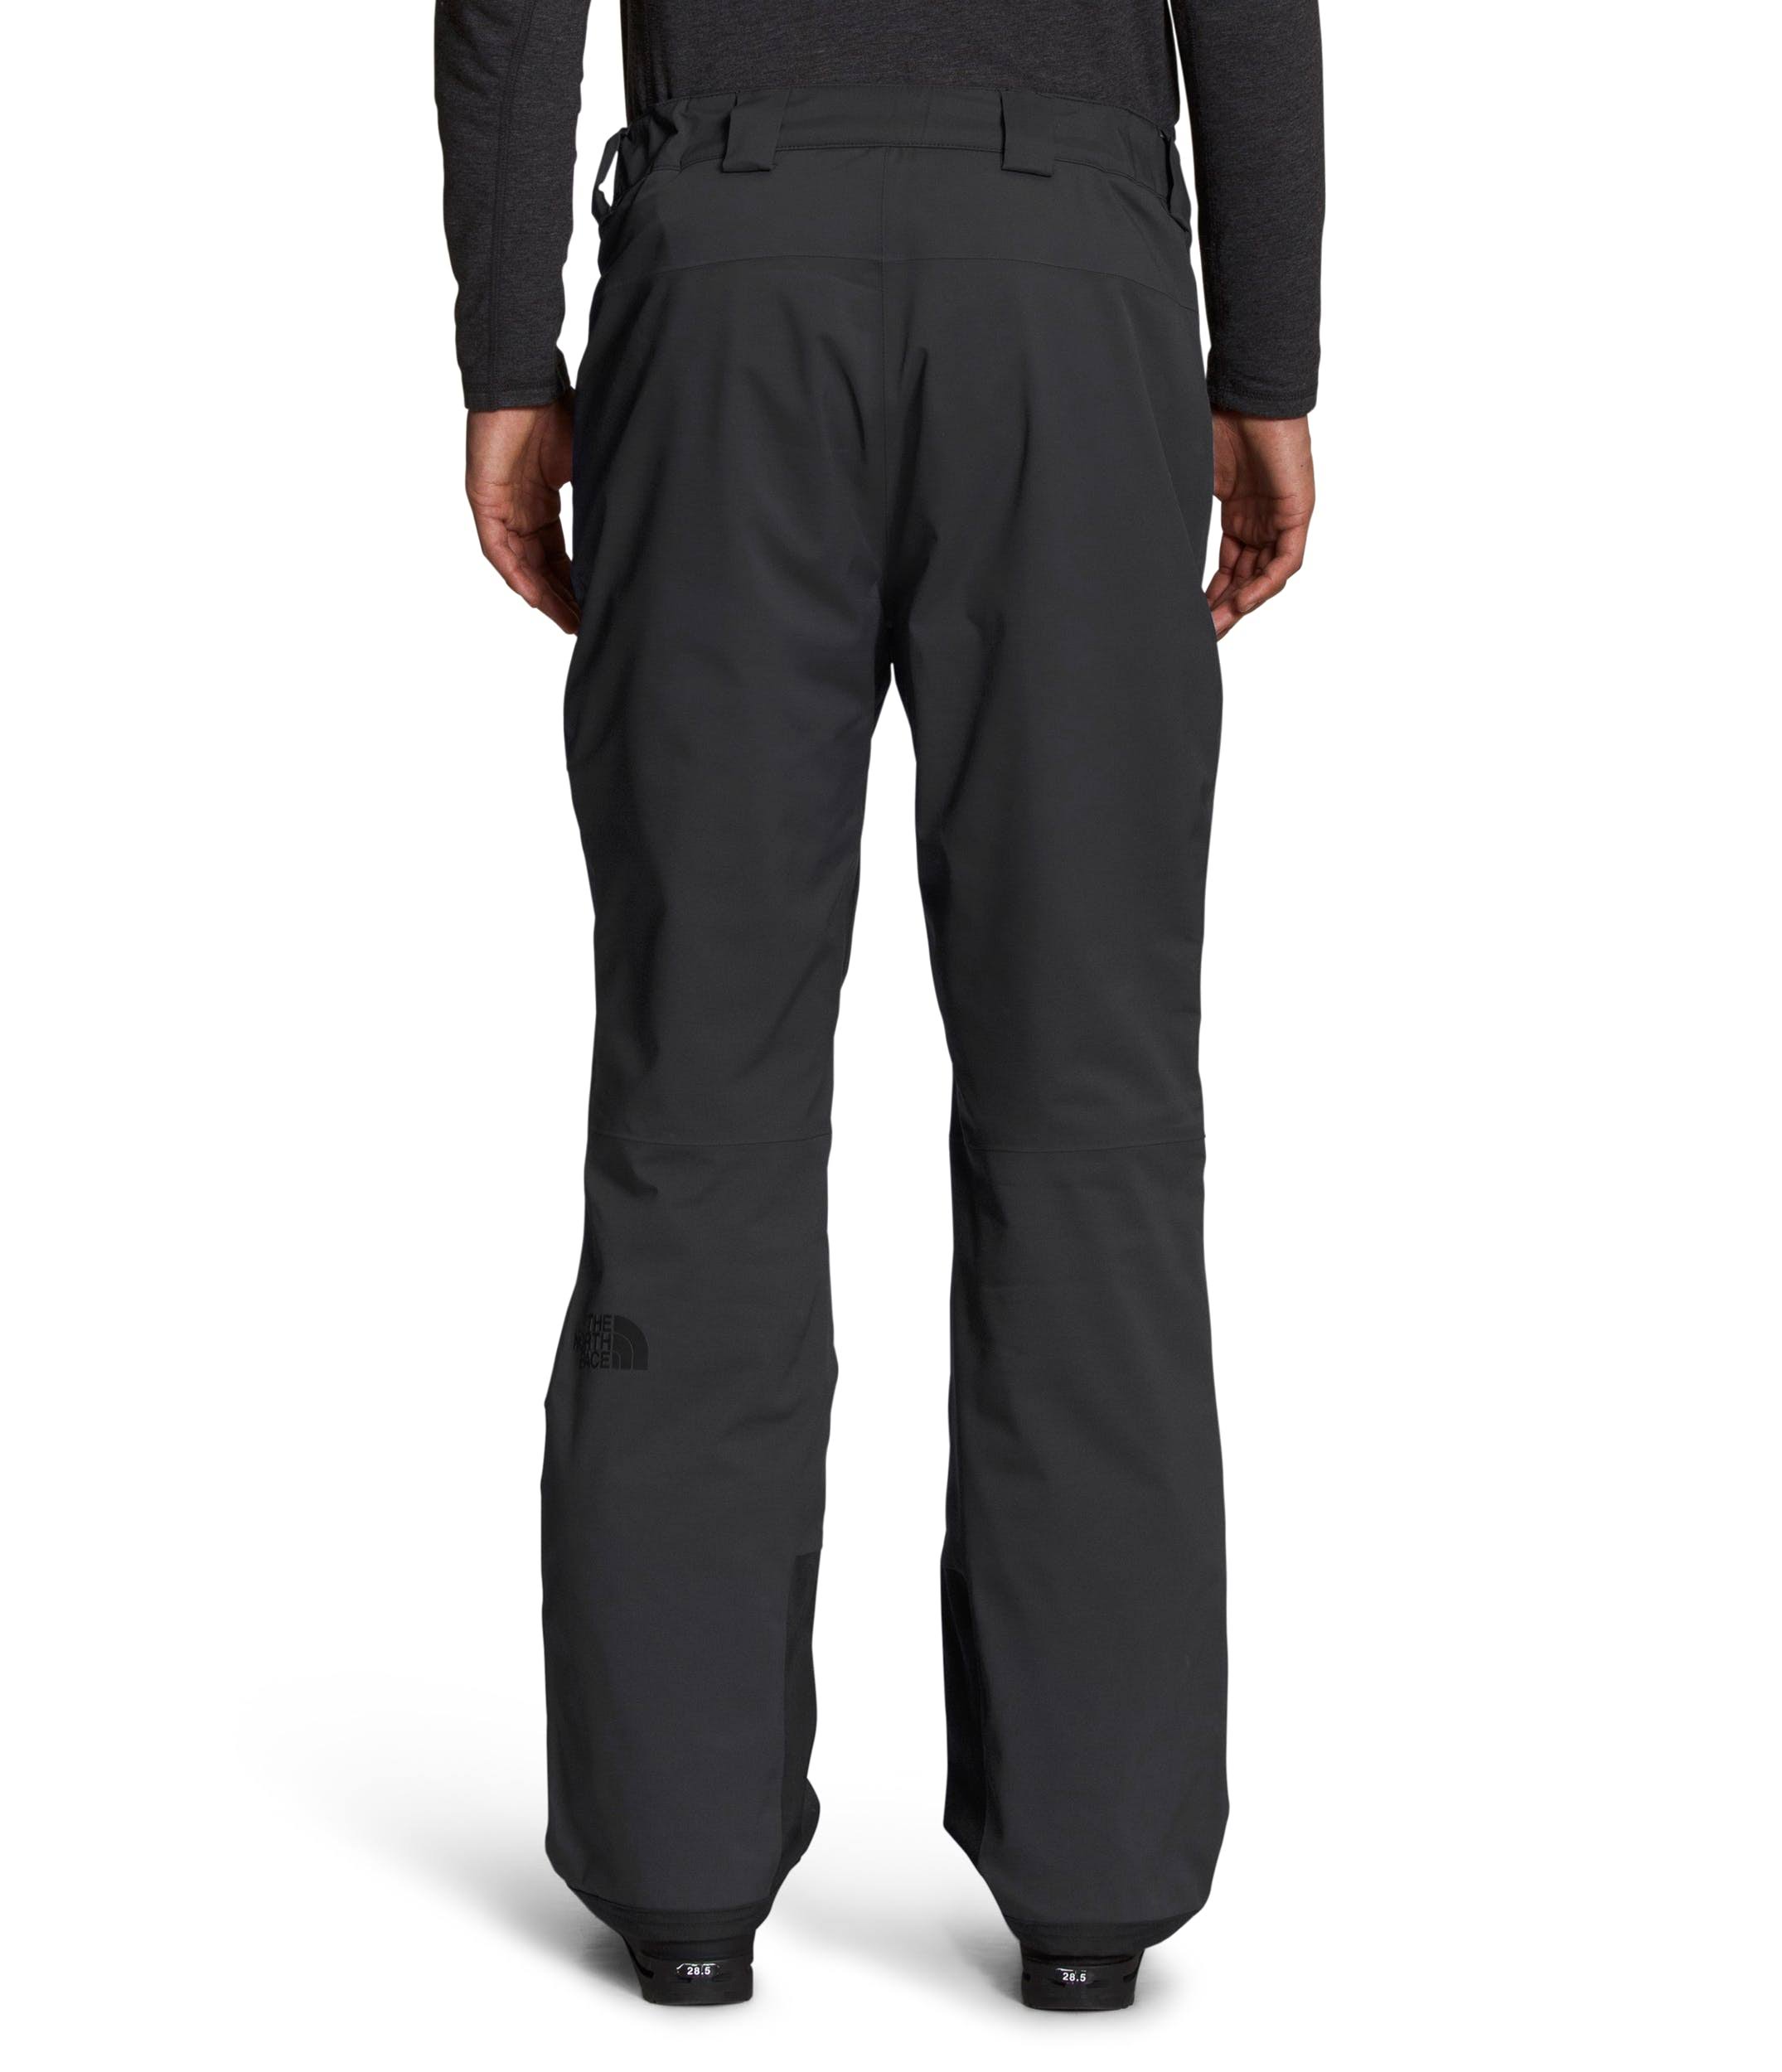 The North Face Chakal Pant Men's - Asphalt Grey - Medium